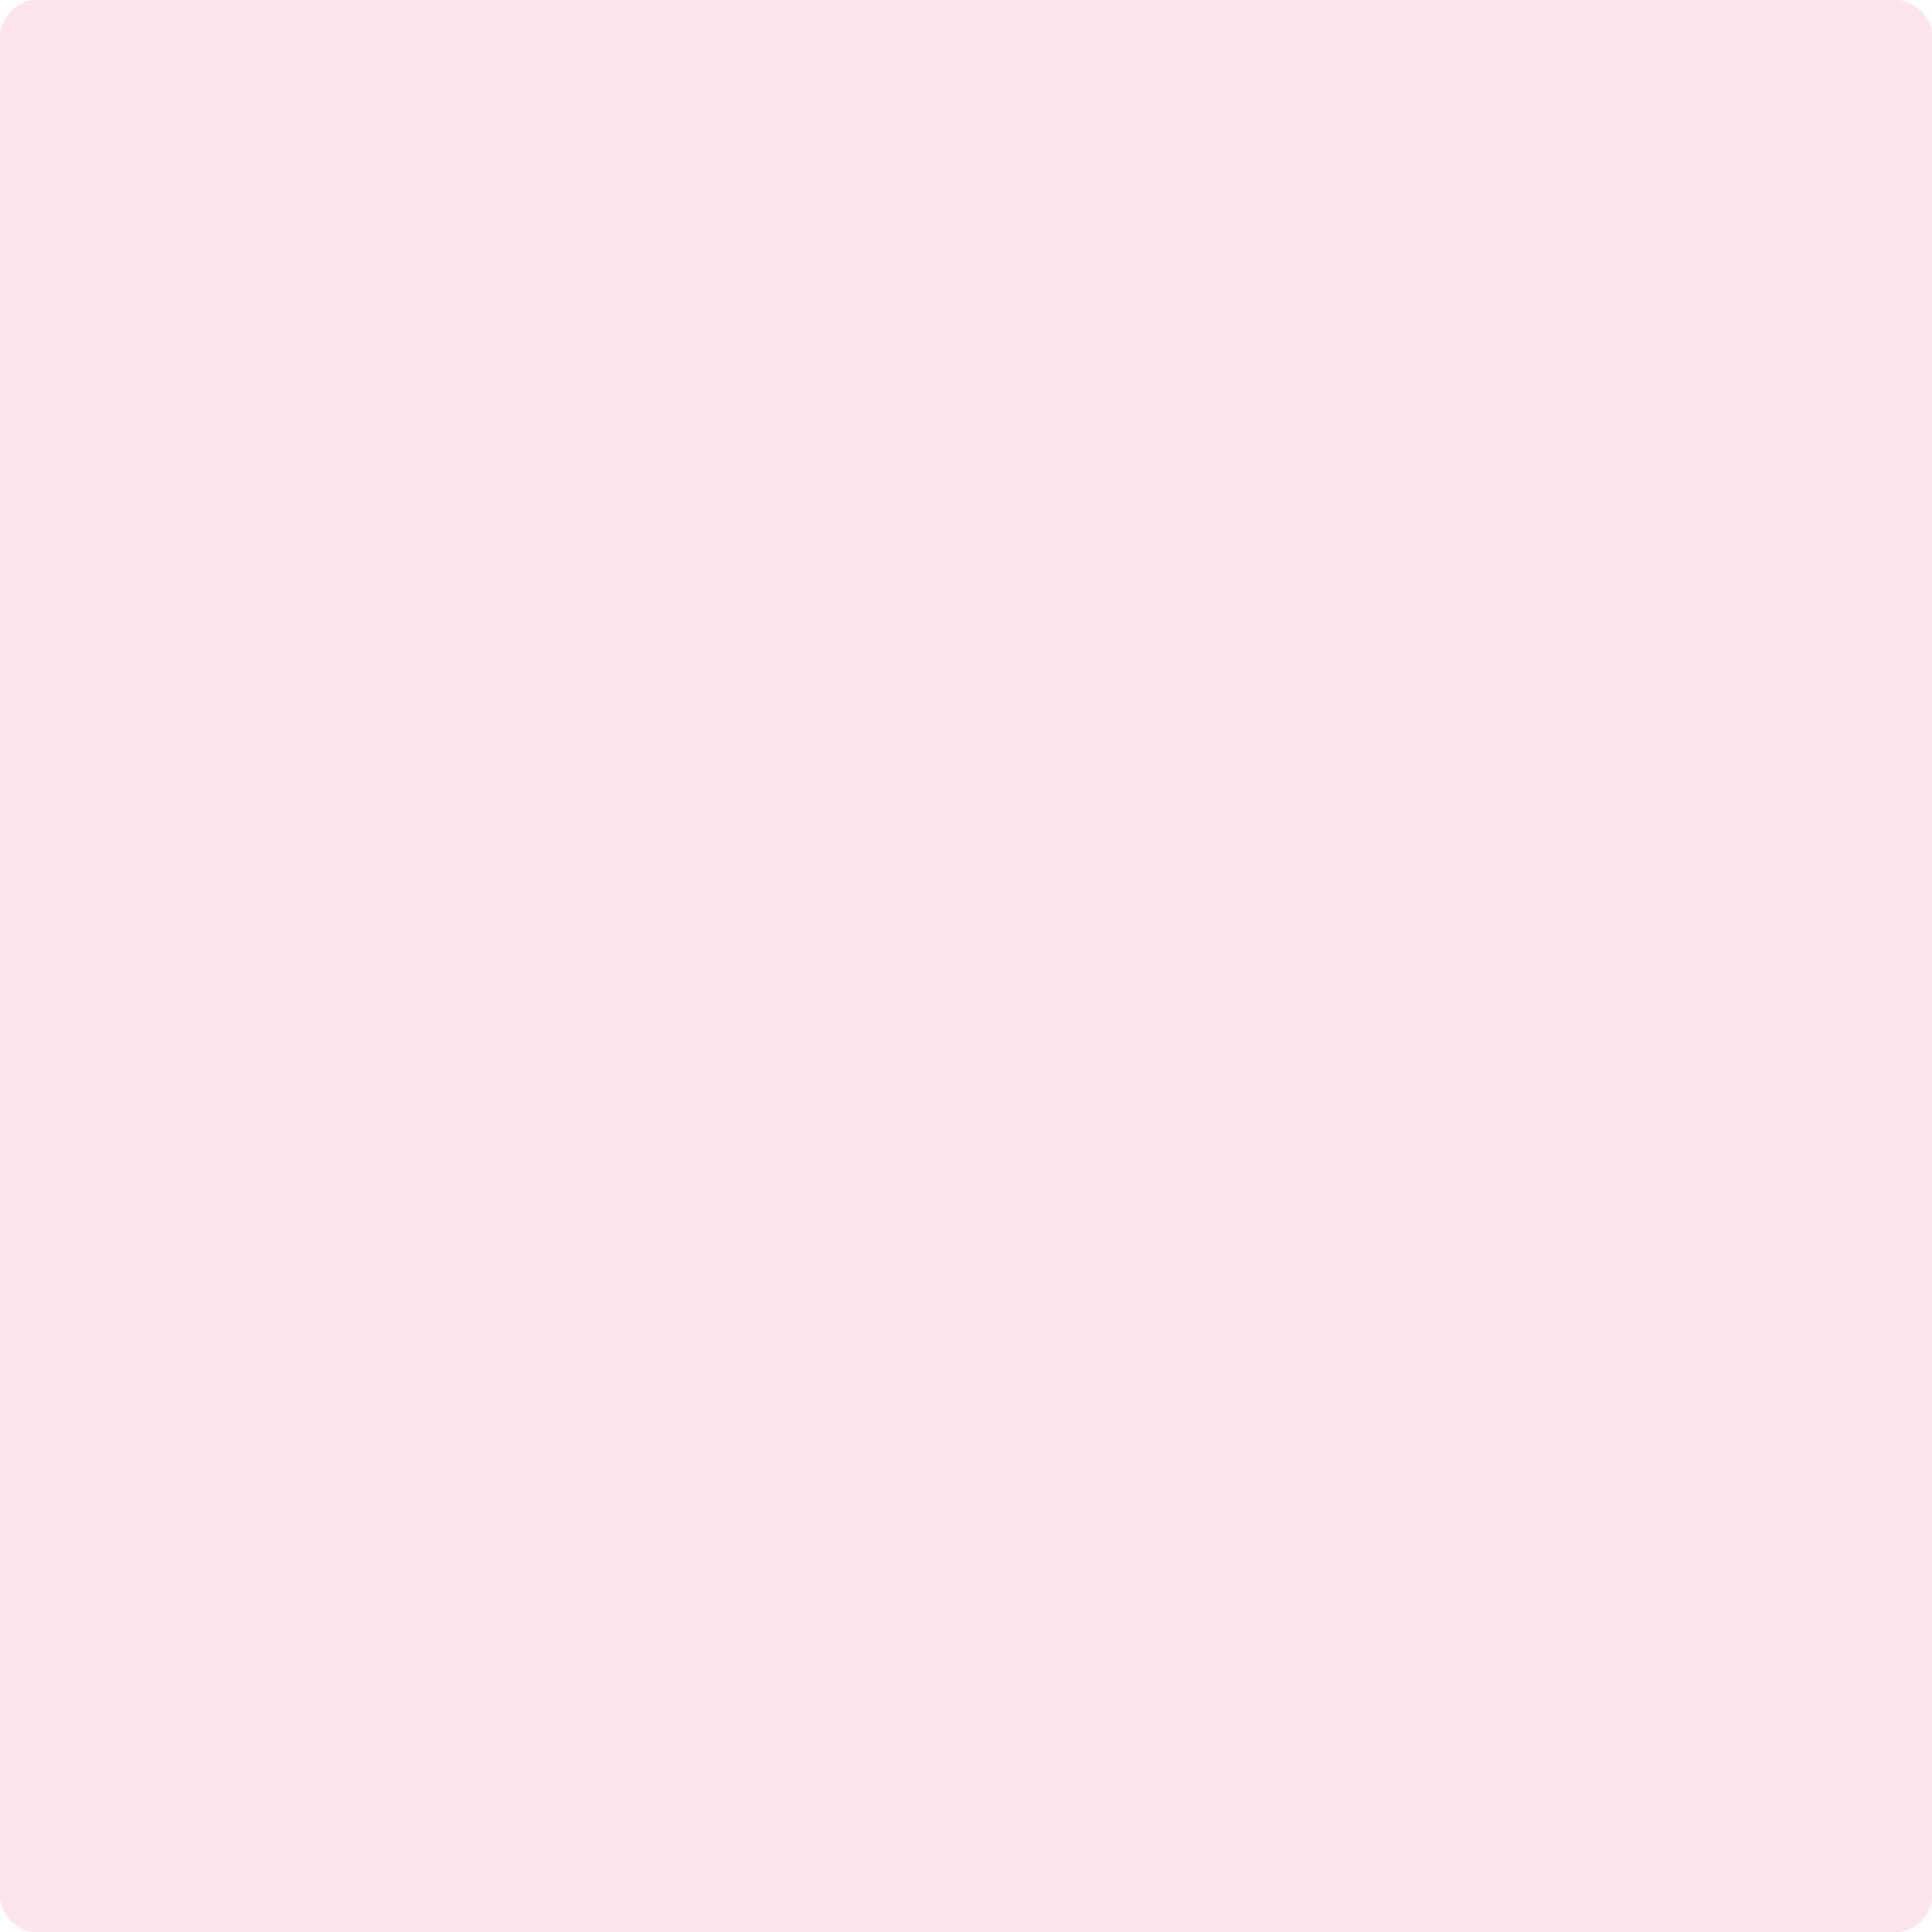 2086-70 50's Pink by Benjamin Moore